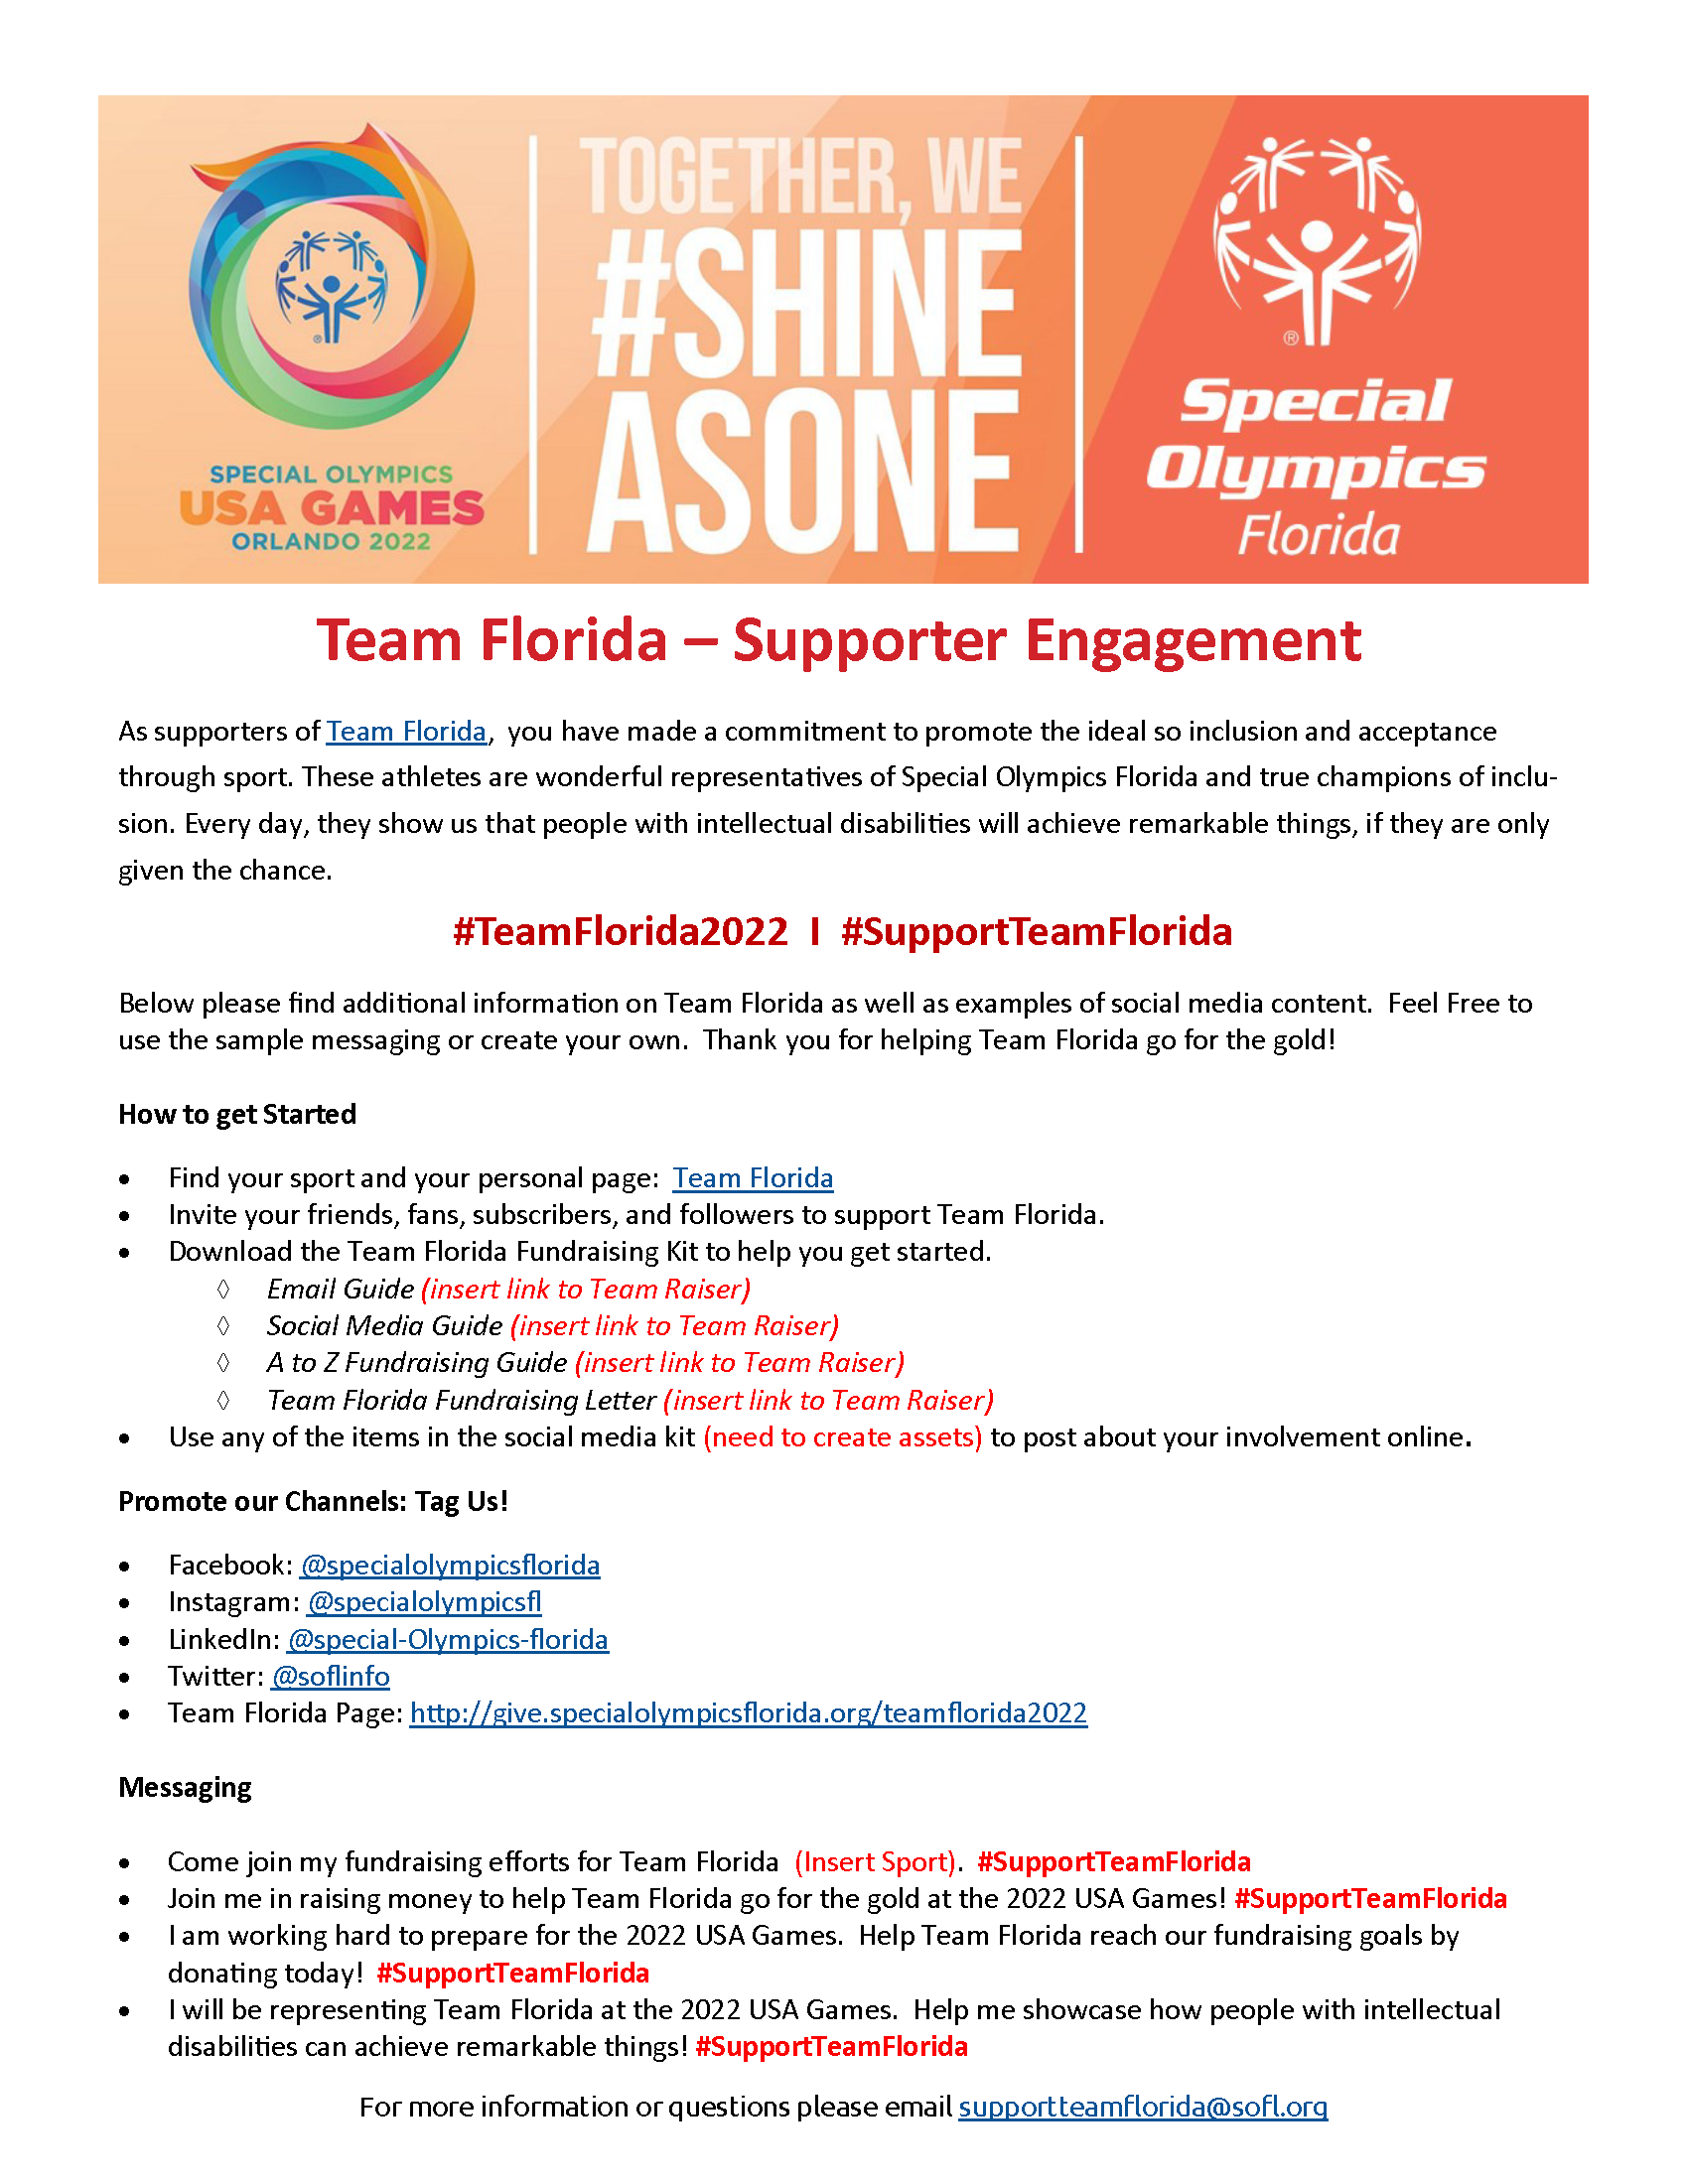 USA Games 2022 - Team Florida Supporter Guide